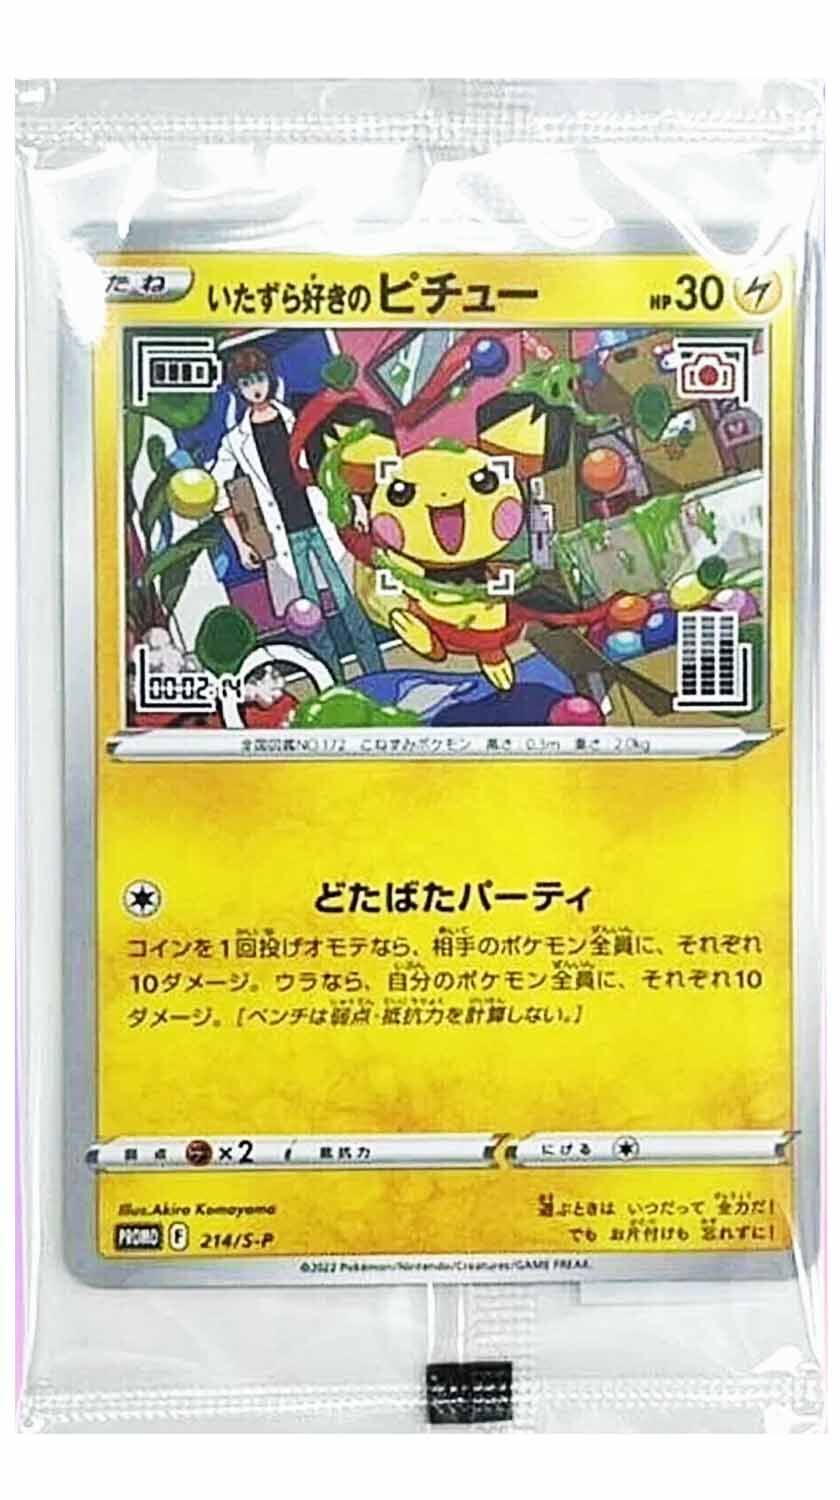 Mischievous Pichu 214/S-P Promokarte - Sealed - Pokémon OCG